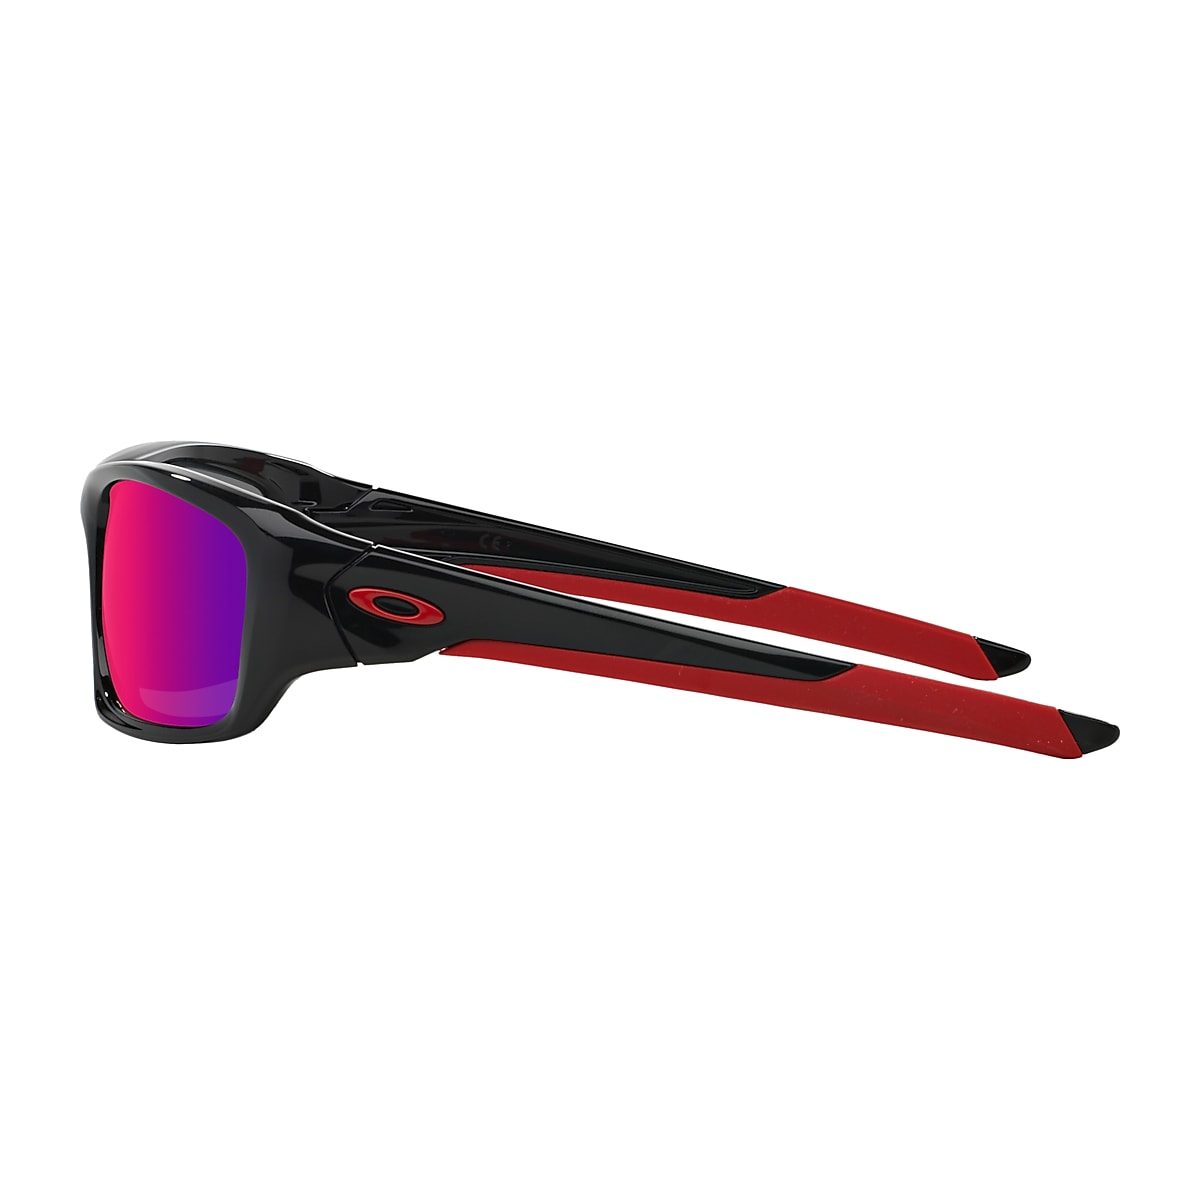 Valve® + Red Iridium Lenses, Polished Black Frame Sunglasses